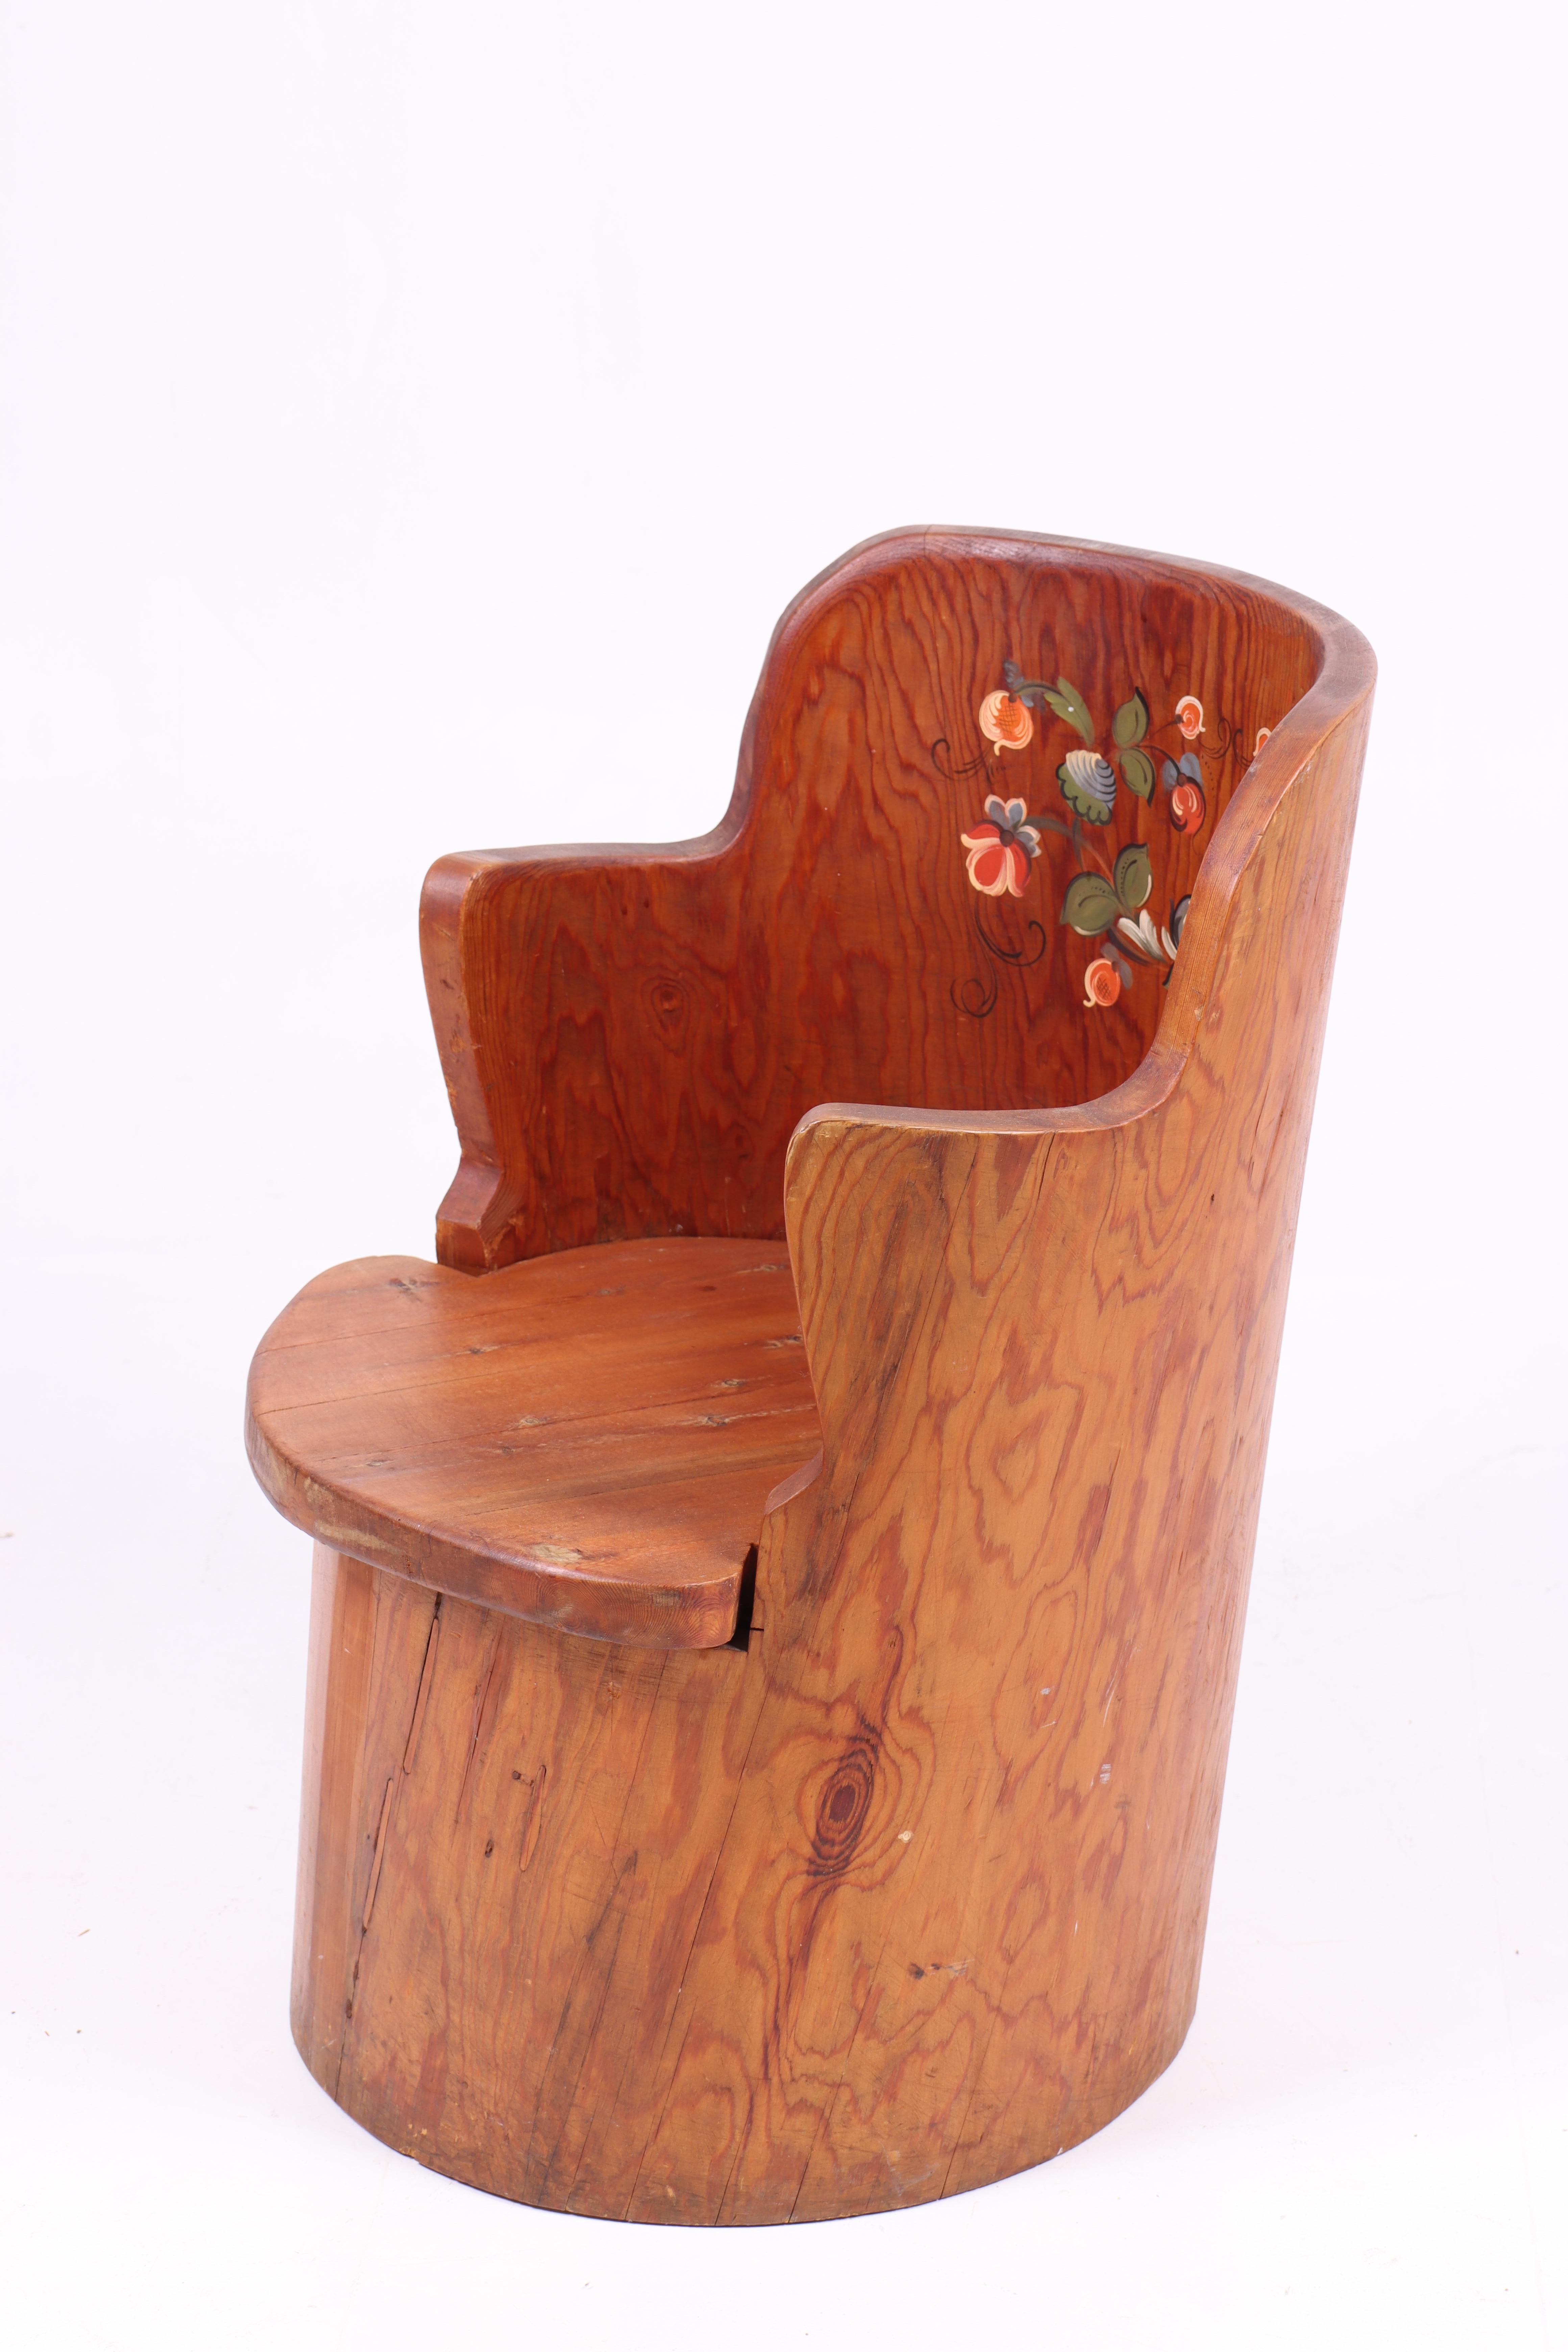 Scandinavian Modern Chair in Pine, Made in Sweden 1940s For Sale